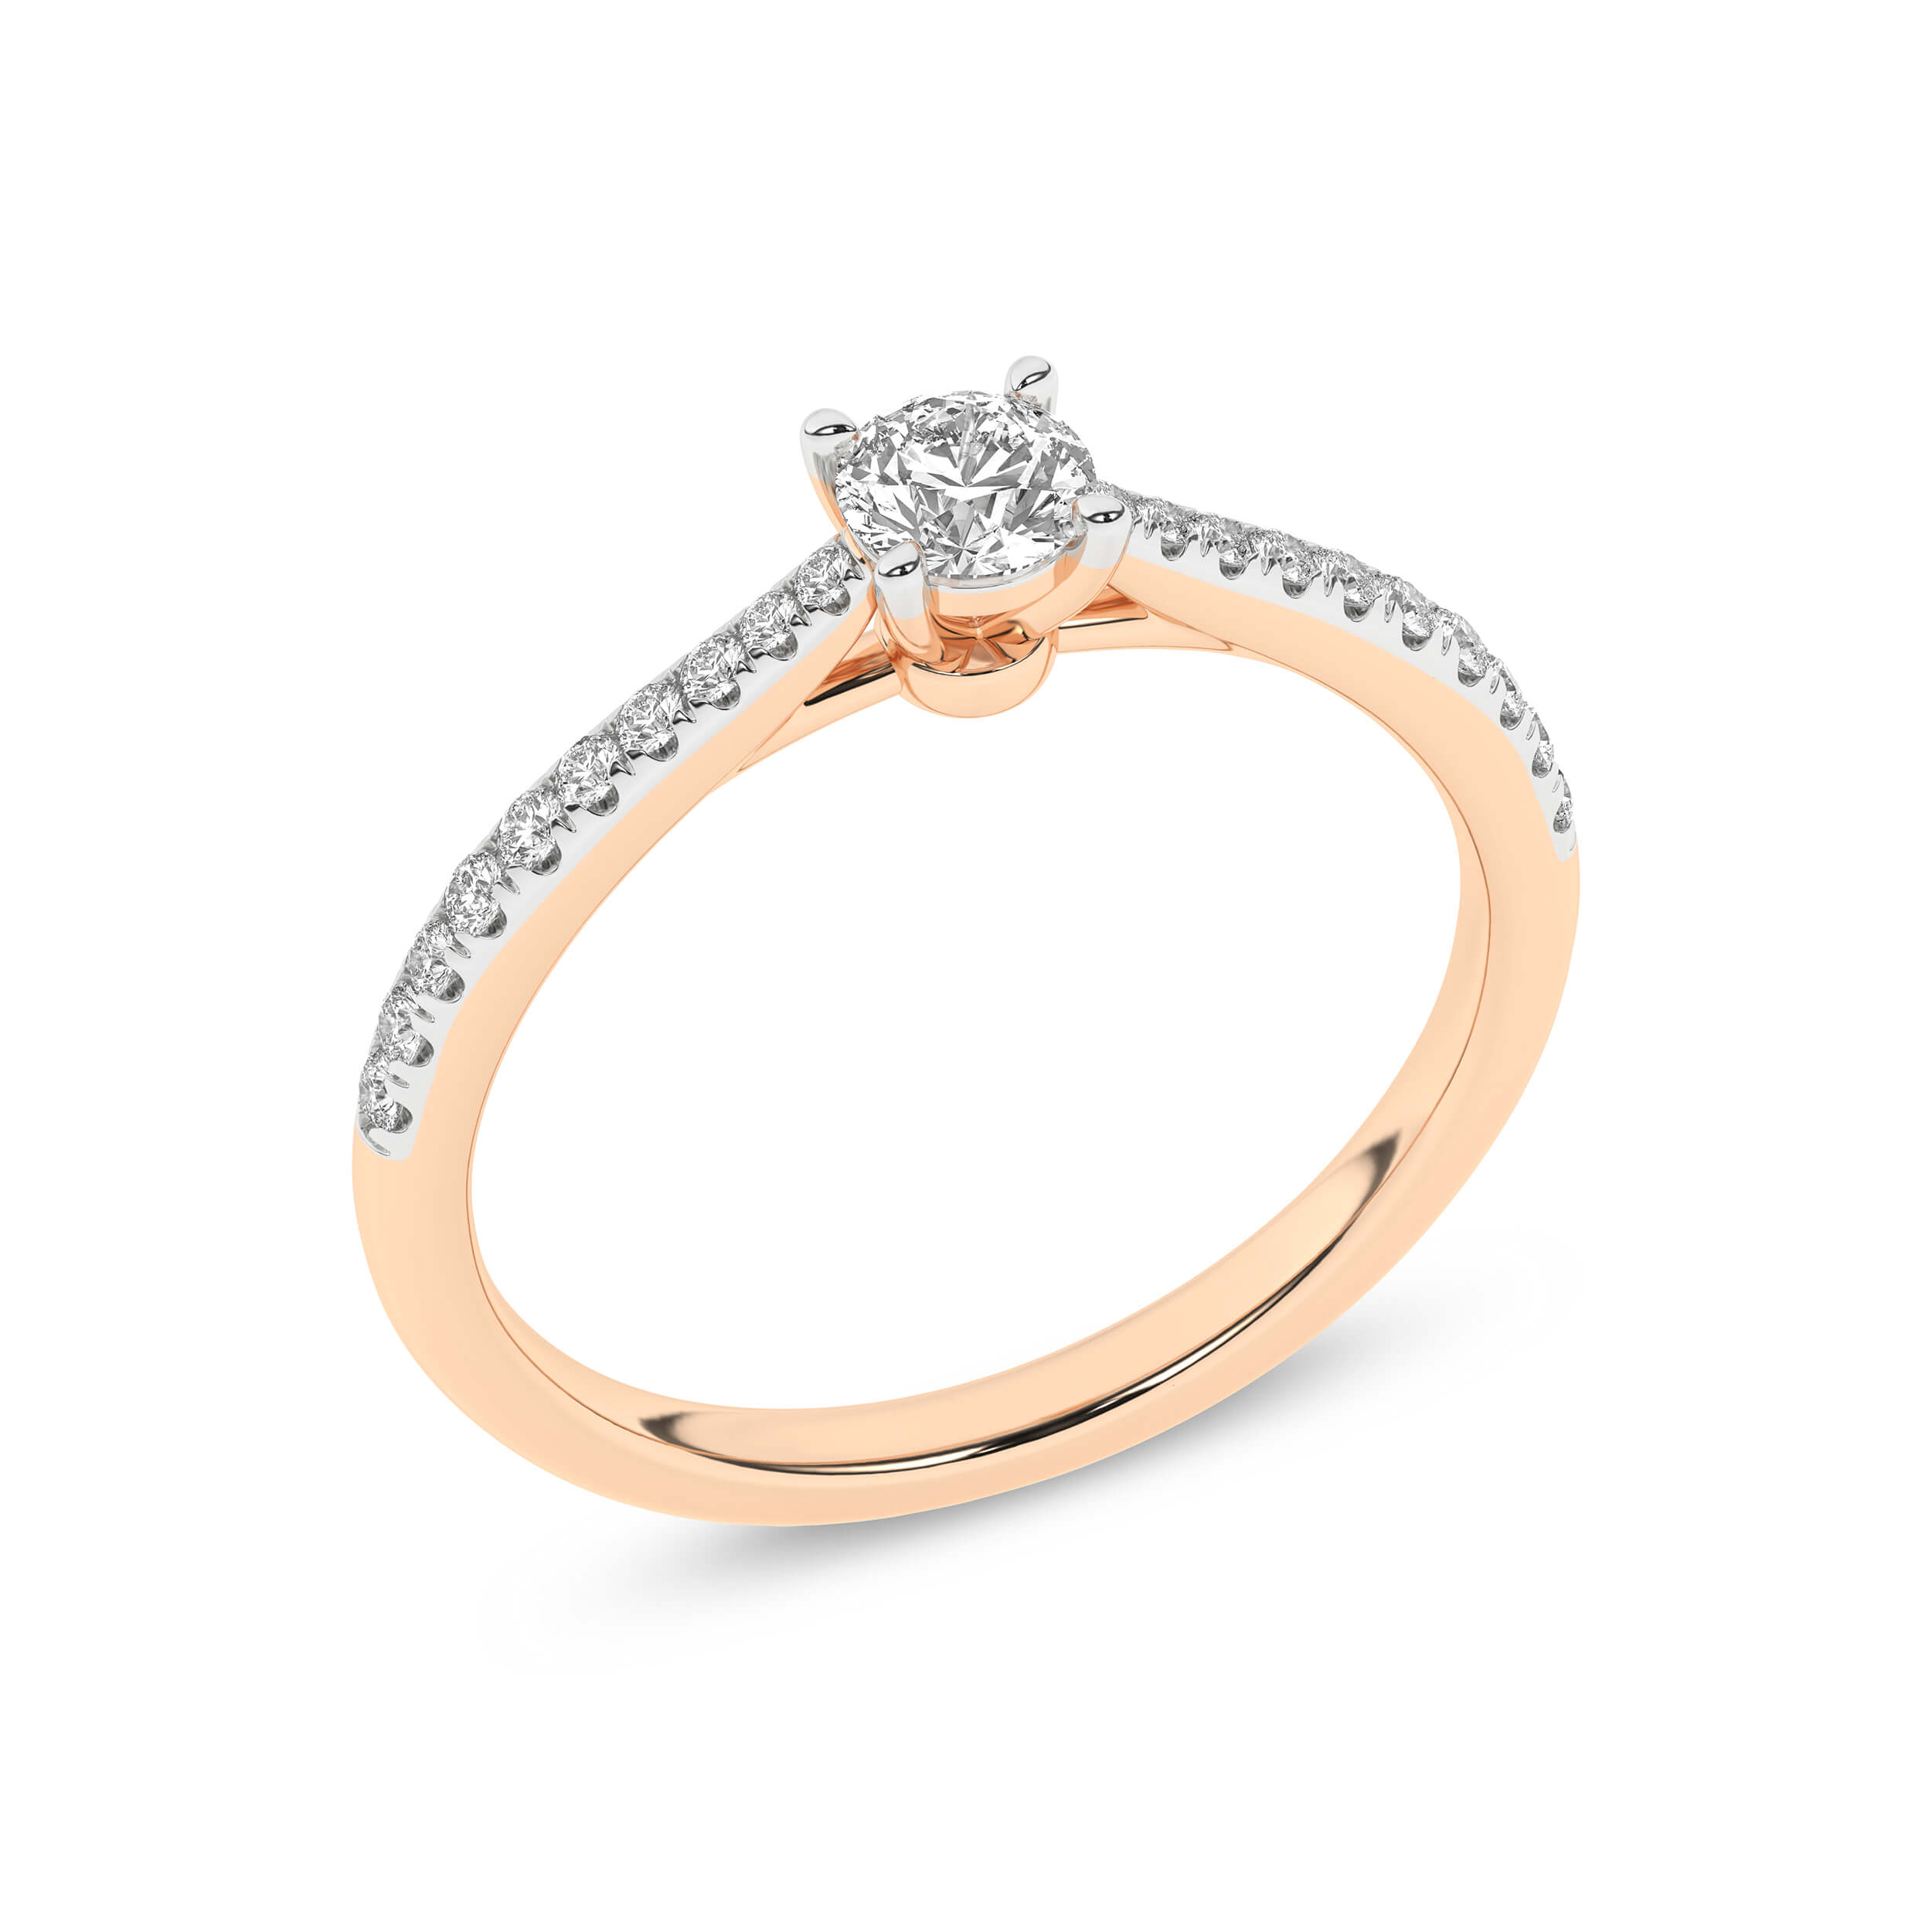 Inel de logodna din Aur Roz 14K cu Diamante 0.40Ct, articol RB21734EG, previzualizare foto 4